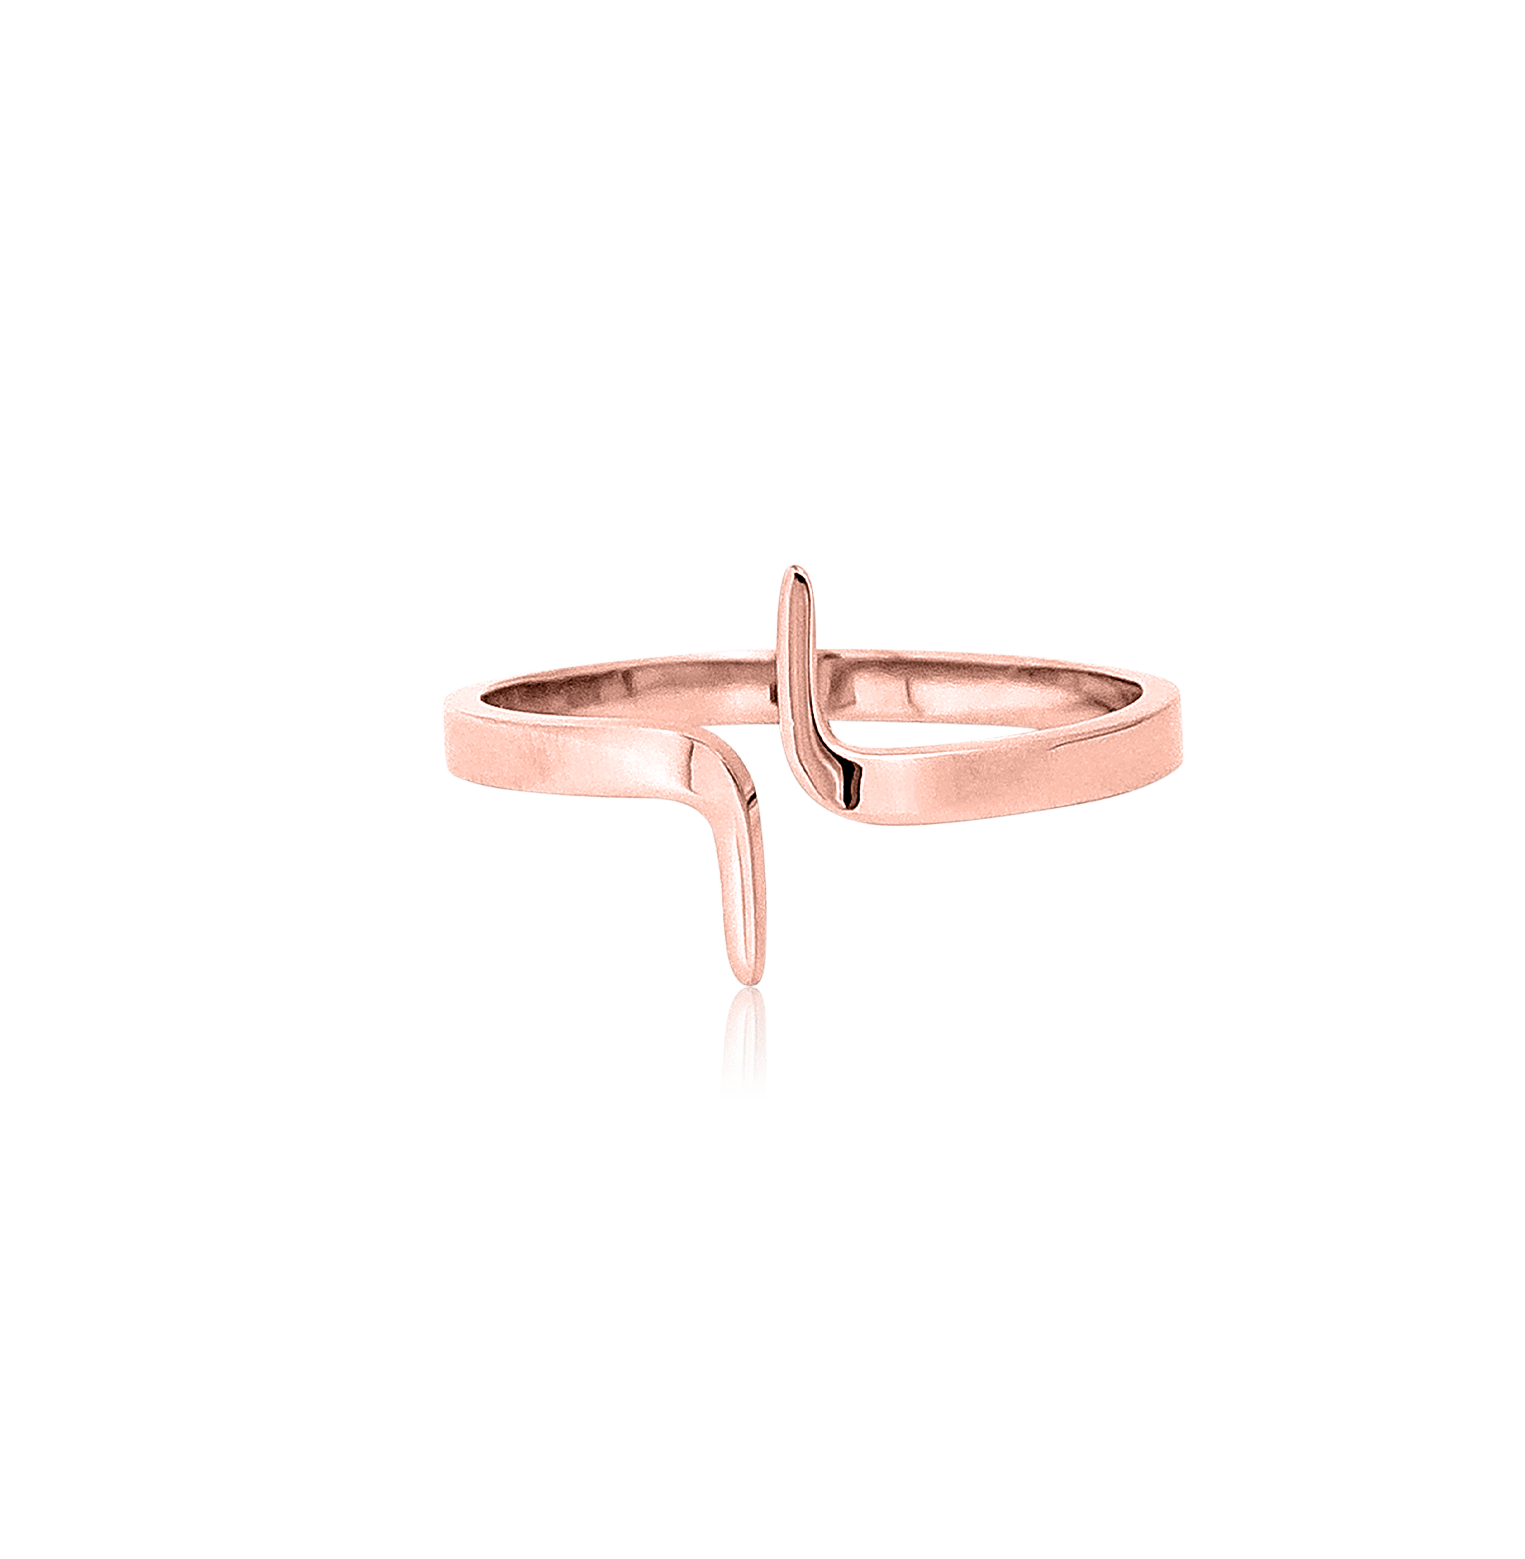 bianco rosso Rings Silver Gemini - Ring cyprus greece jewelry gift free shipping europe worldwide